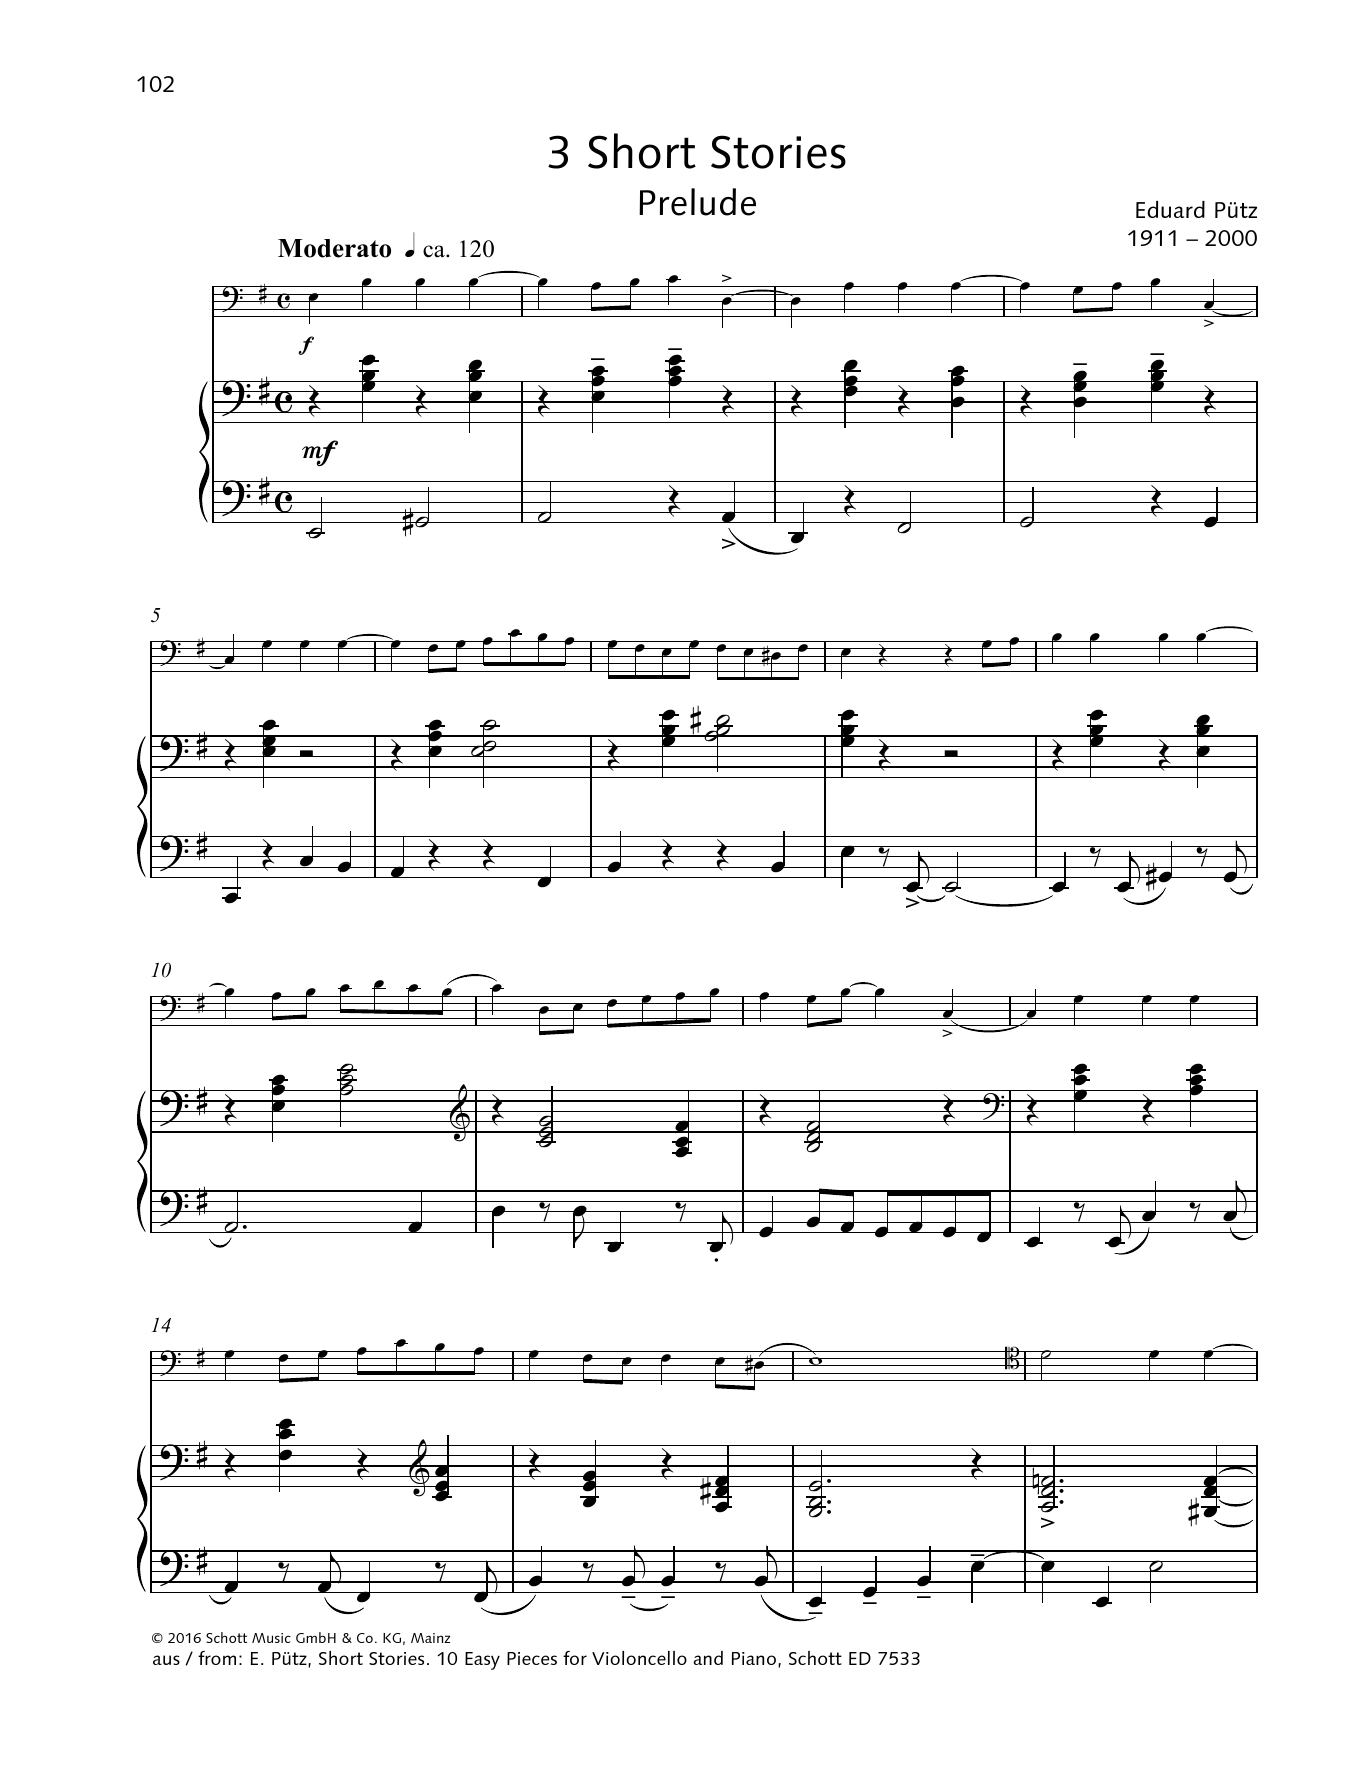 Eduard Pütz Prélude Sheet Music Notes & Chords for String Solo - Download or Print PDF